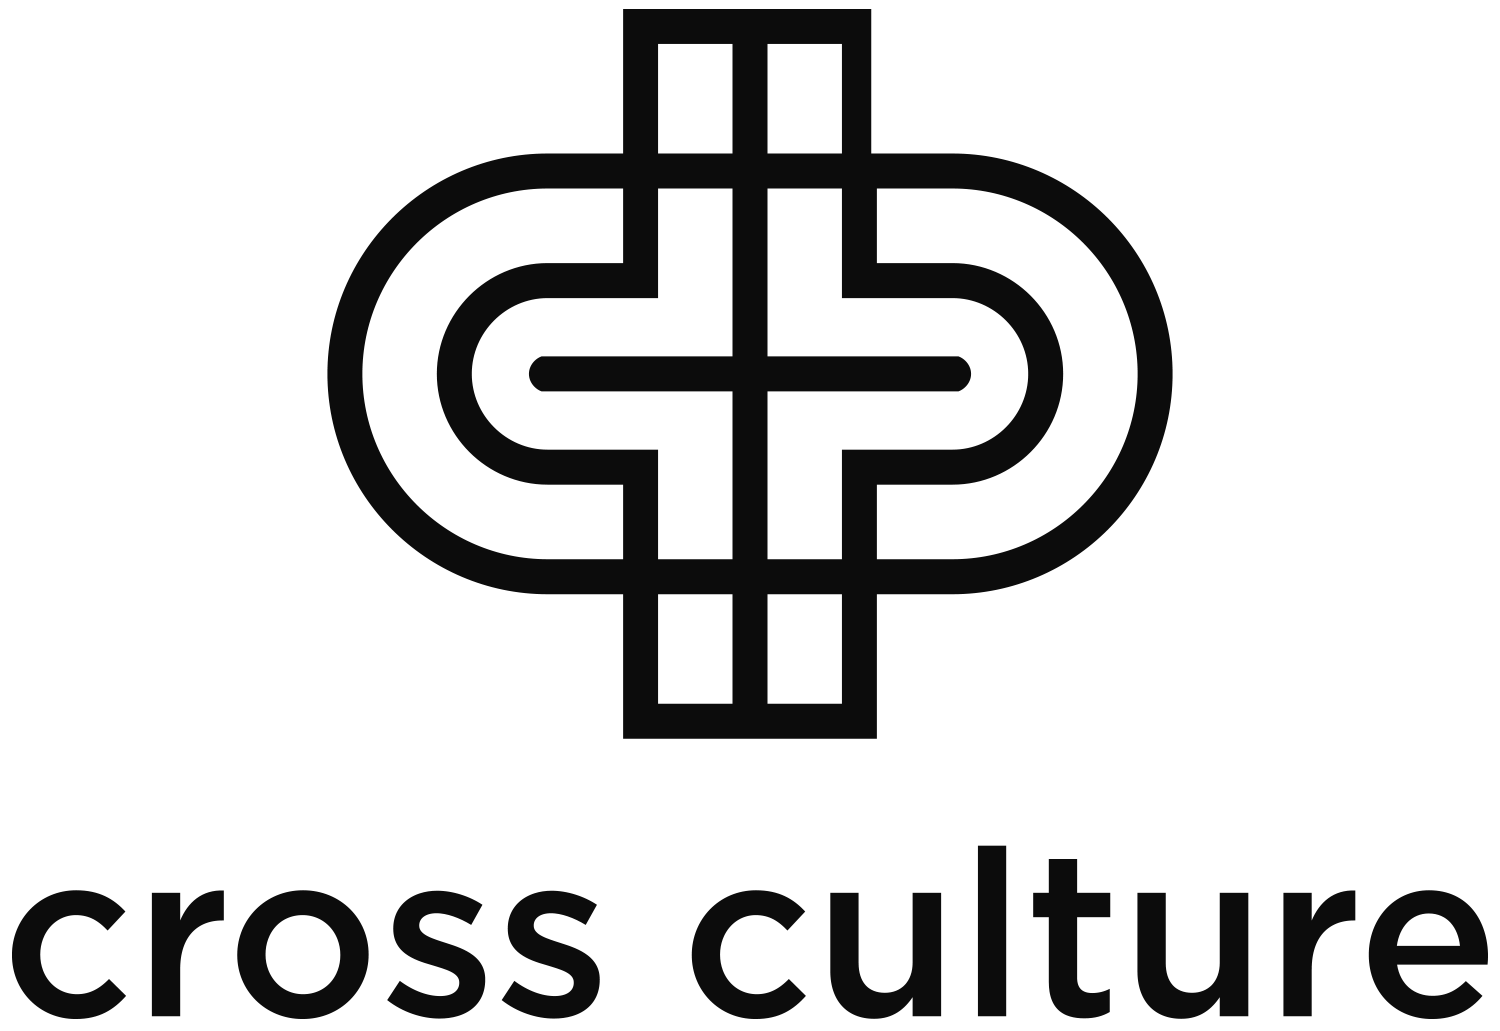 Cross Culture